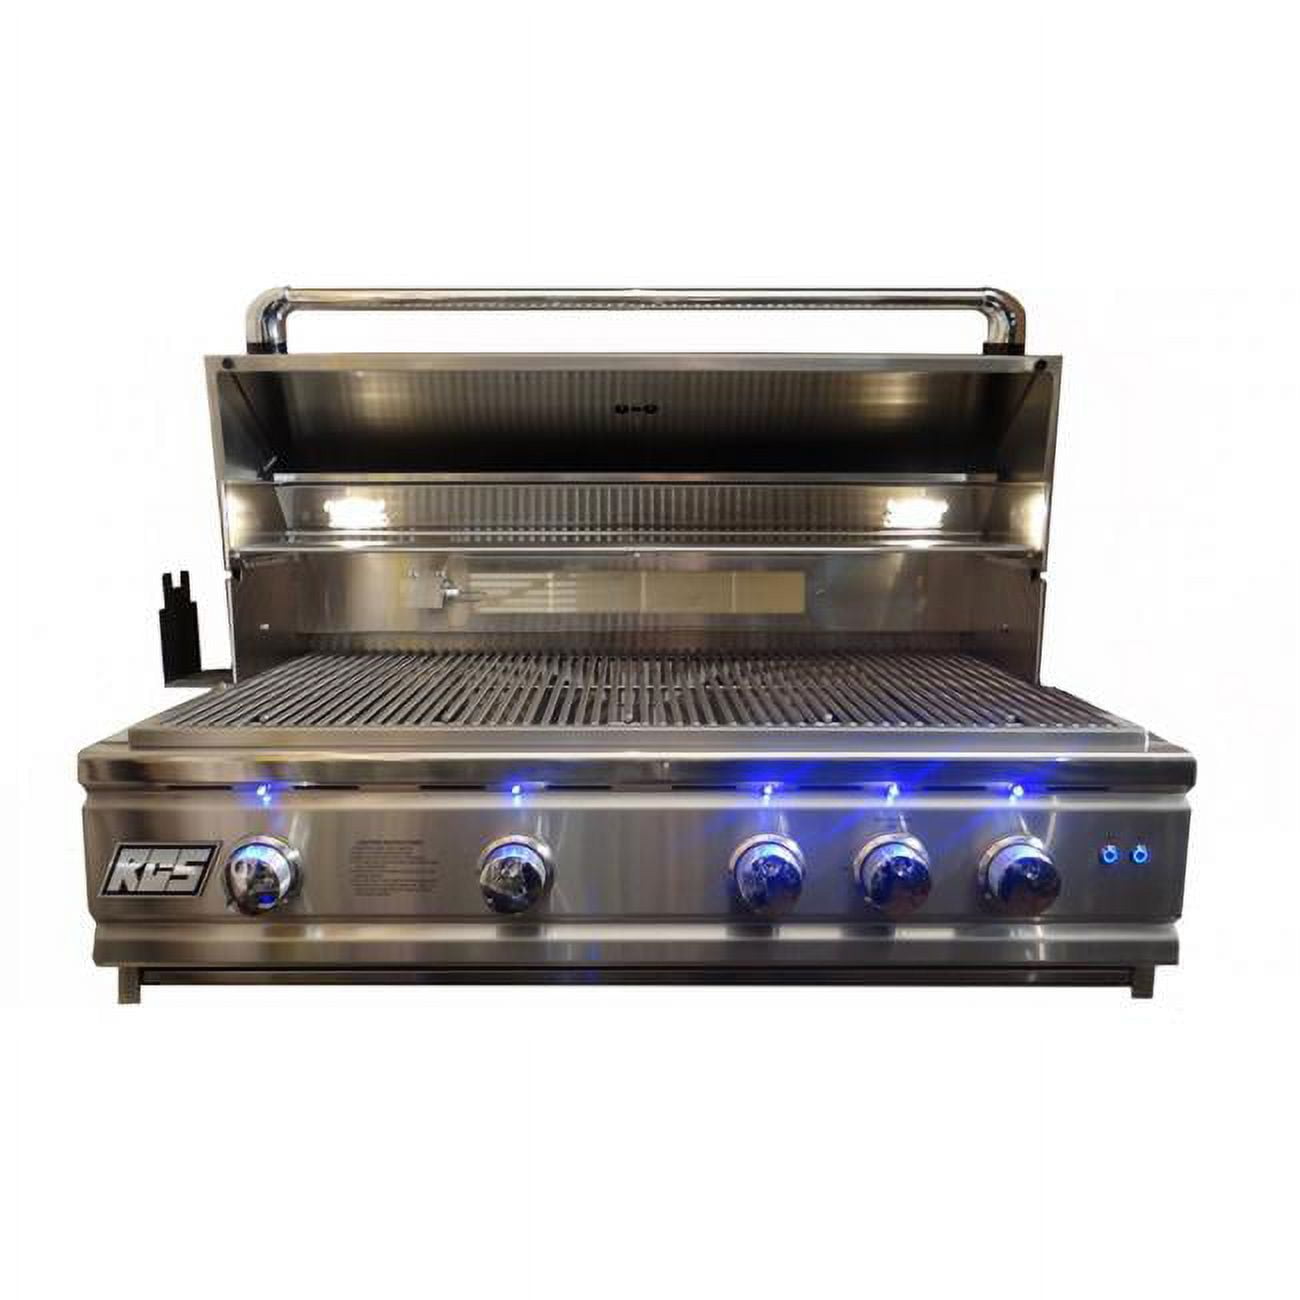 Hogan Supplies 38 in. Cutlass Pro Grill, Blue LED with Rear Burner-Propane